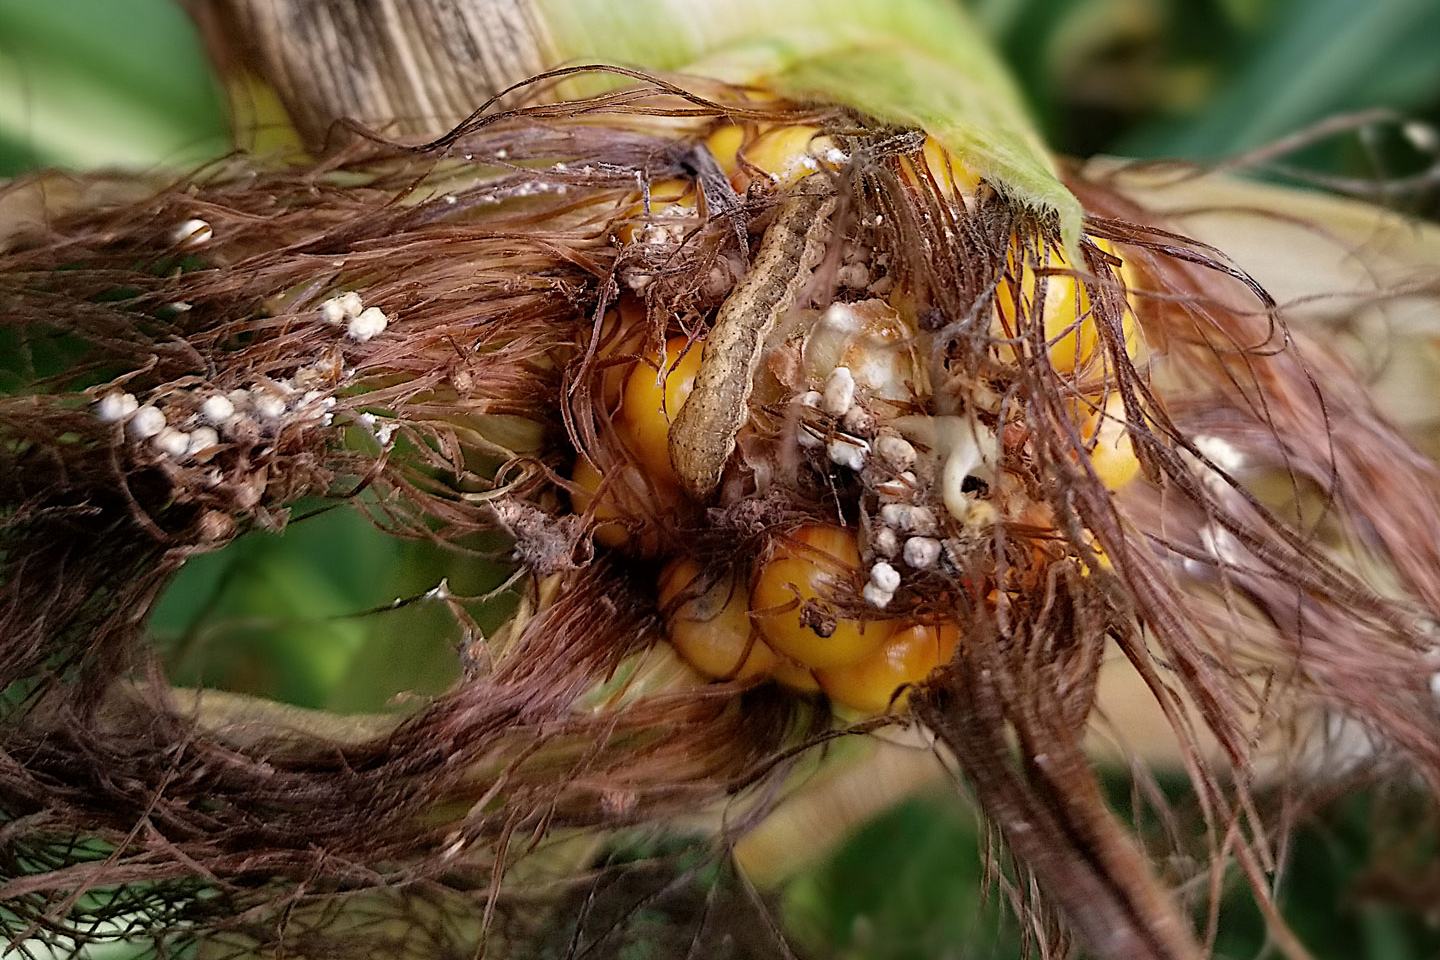 Pest damage to corn